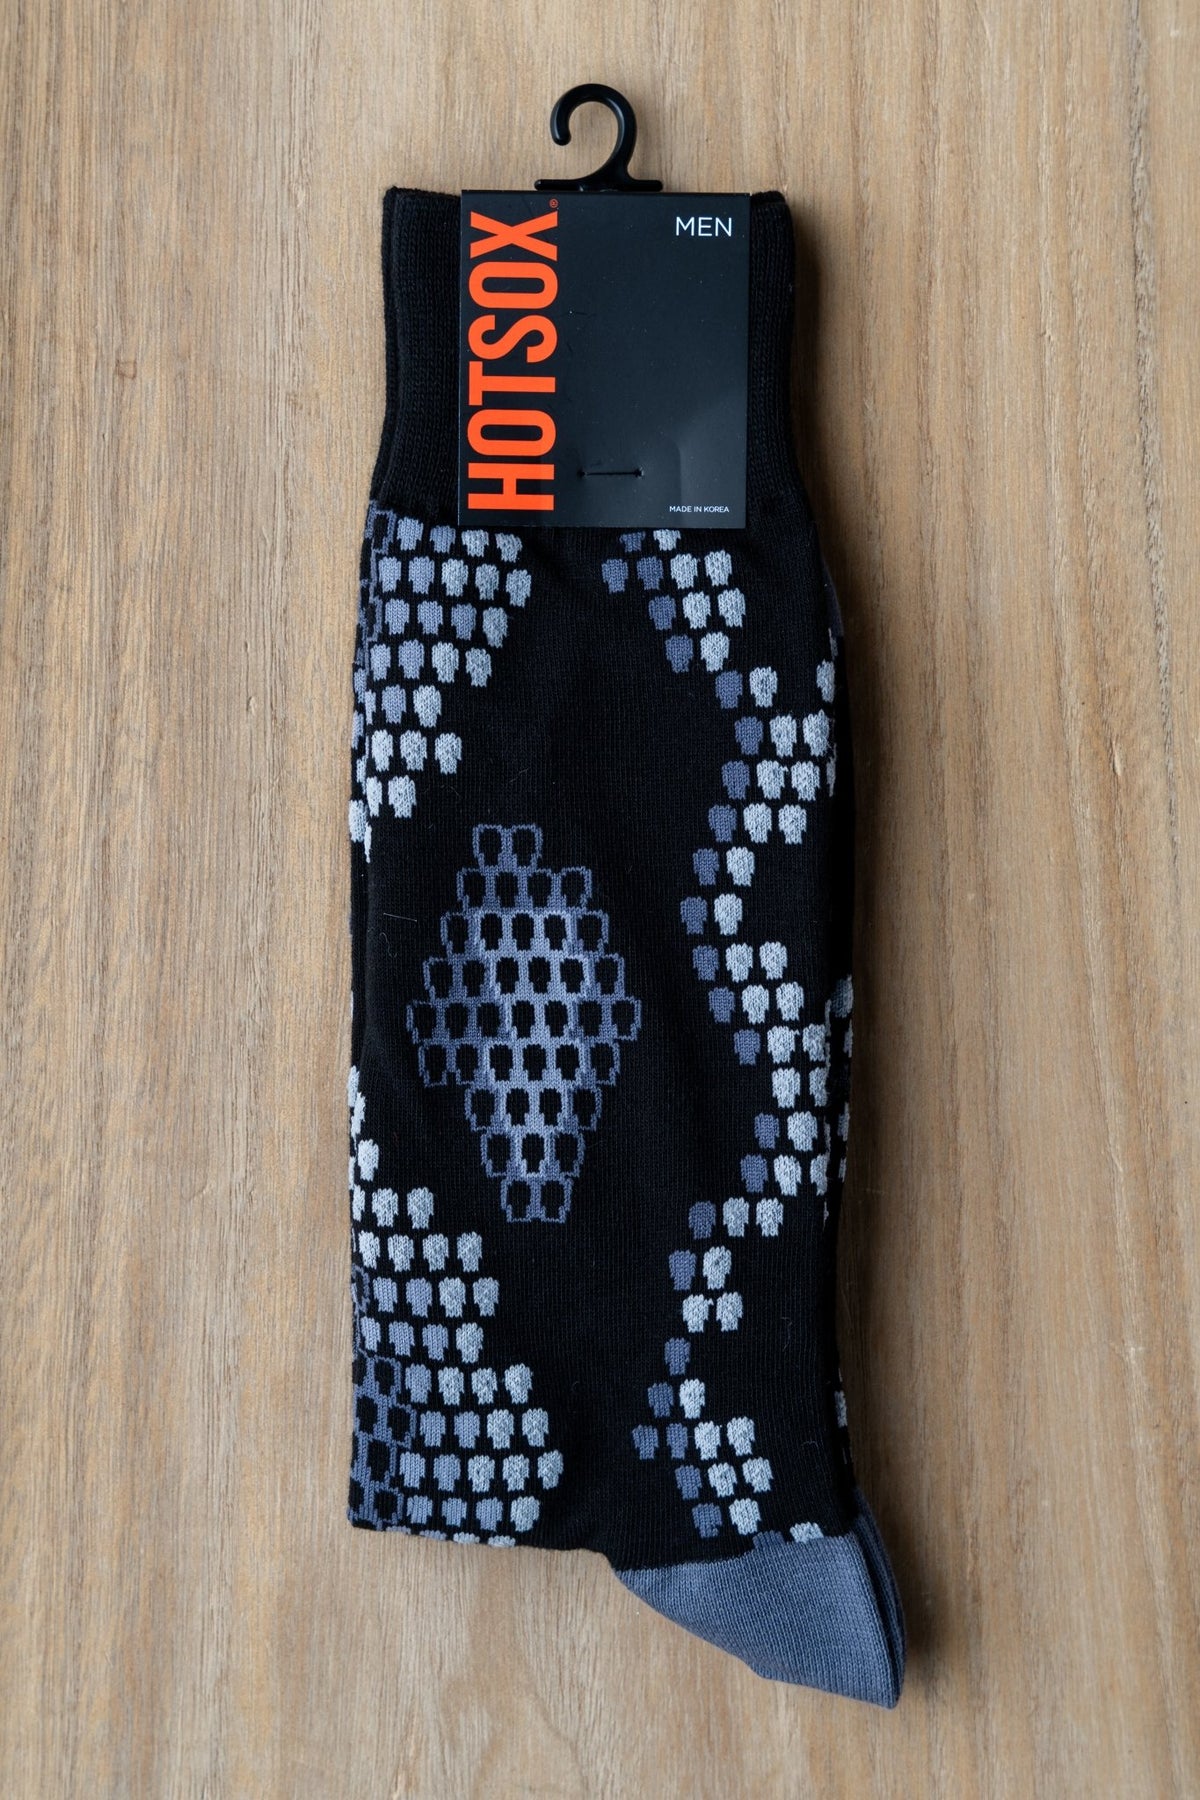 HotSox snake skin socks black - Trendy Socks at Lush Fashion Lounge Boutique in Oklahoma City